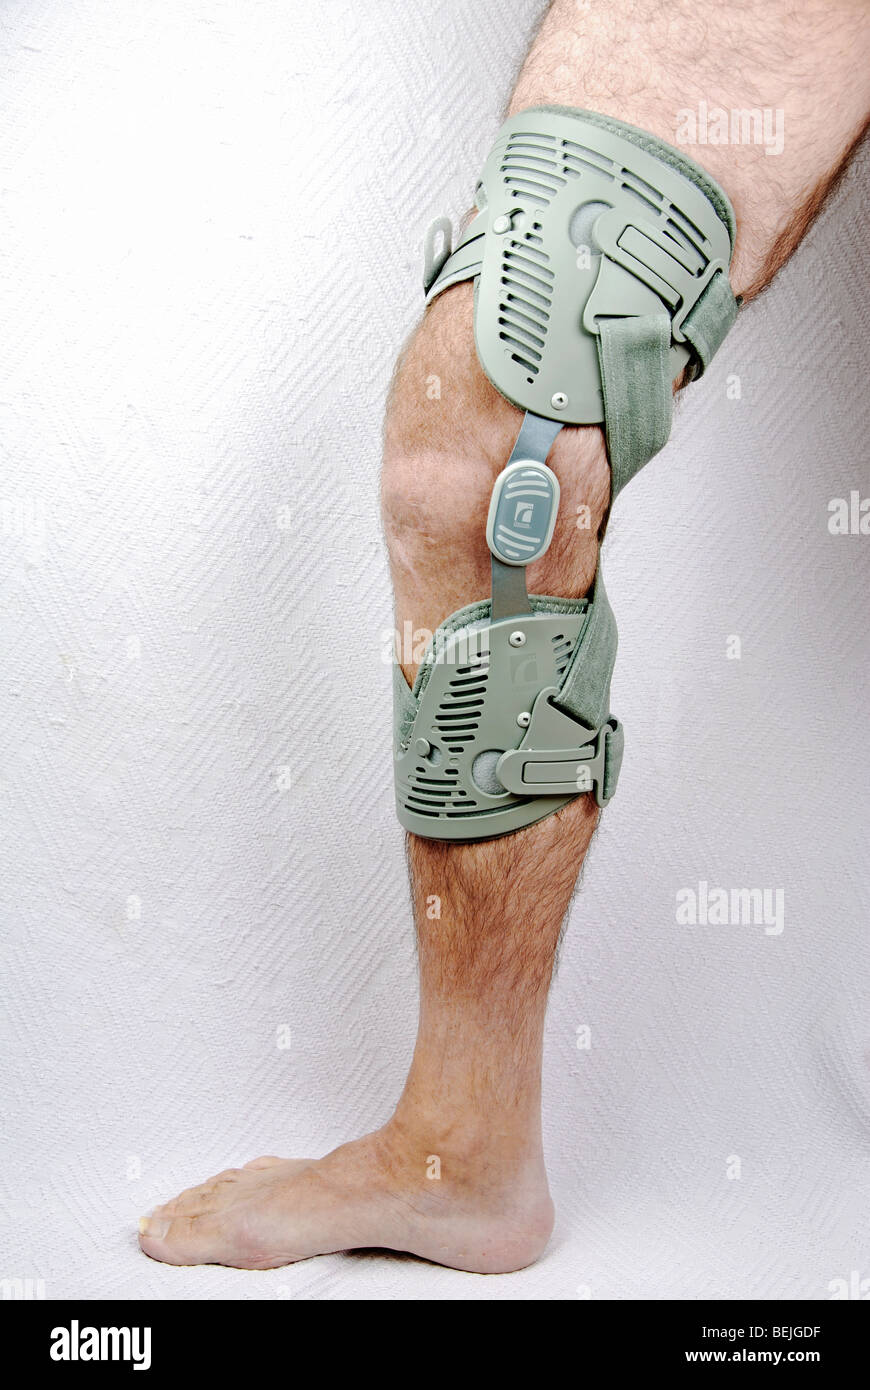 a man wearing a knee brace on an injured leg Stock Photo